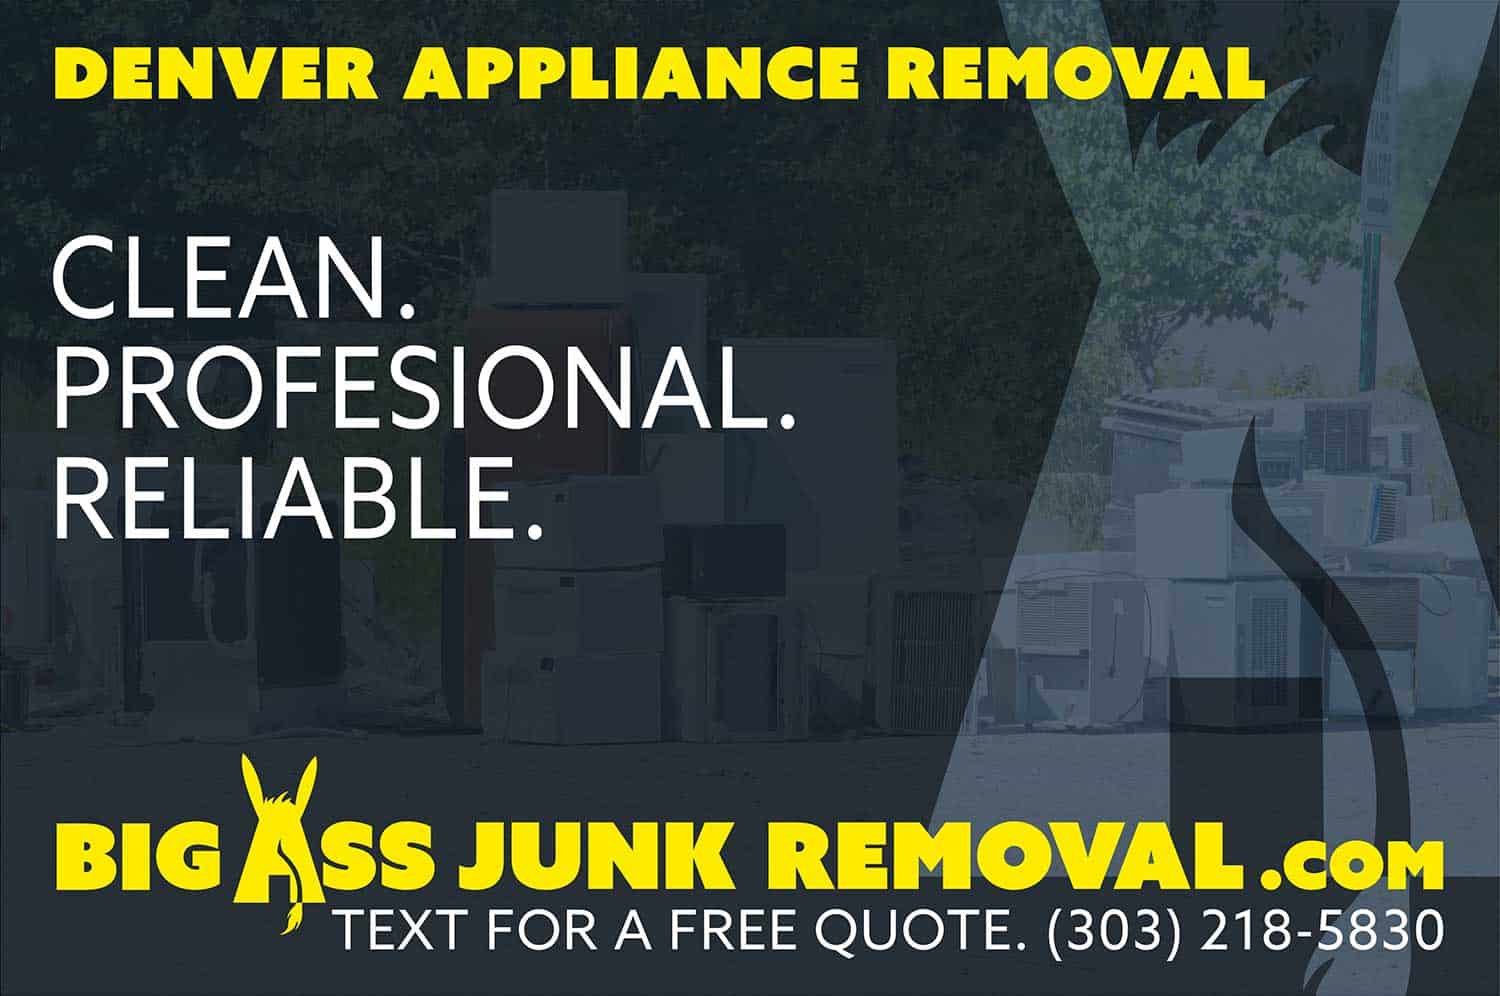 Appliance Removal Denver